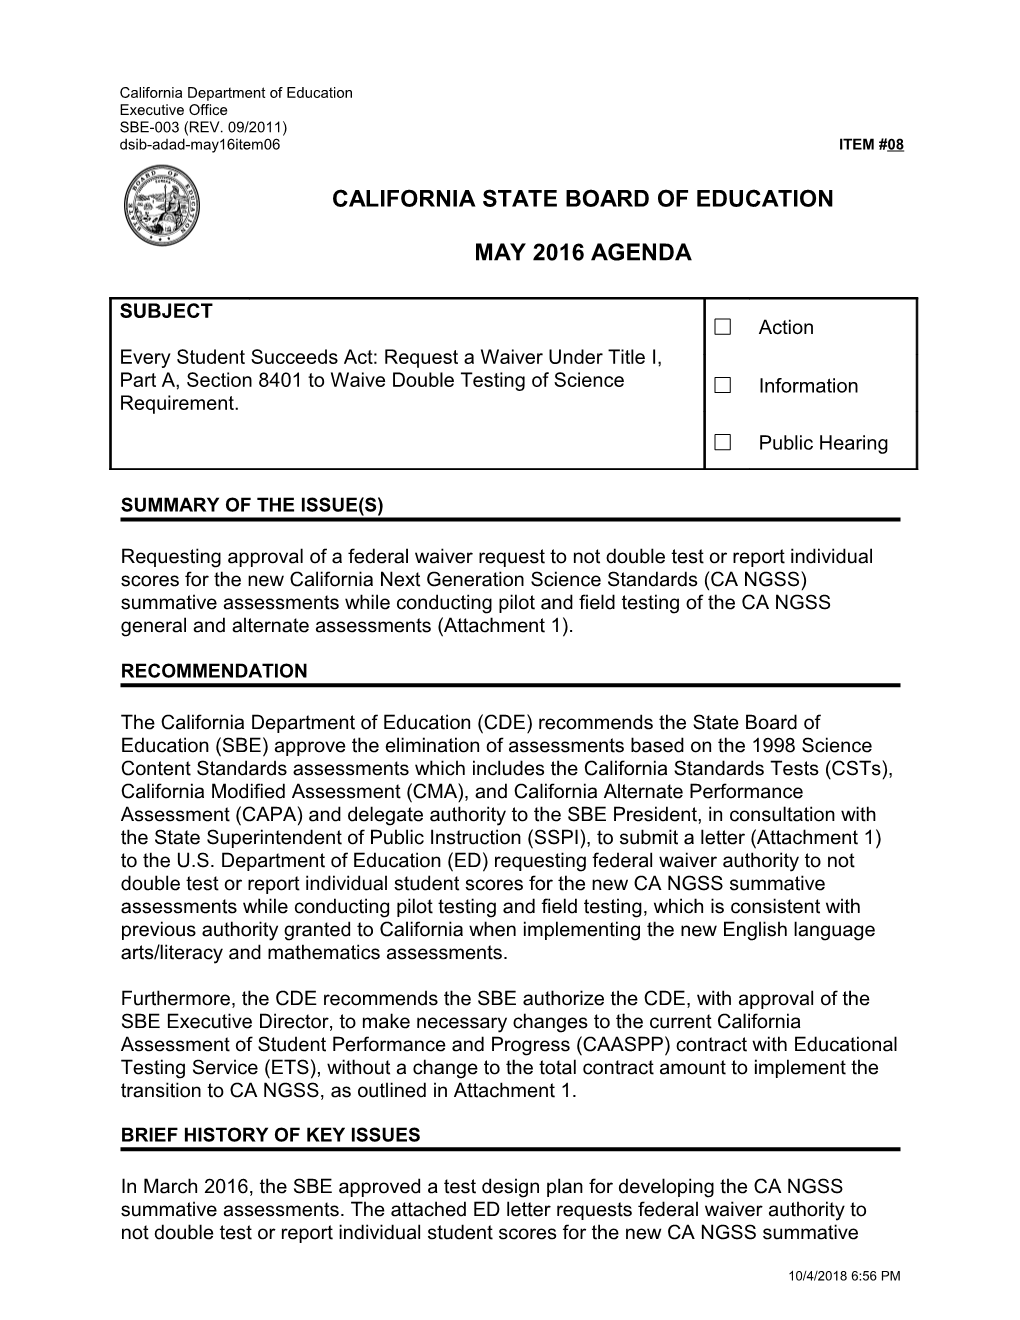 May 2016 Agenda Item 08 - Meeting Agendas (CA State Board of Education)